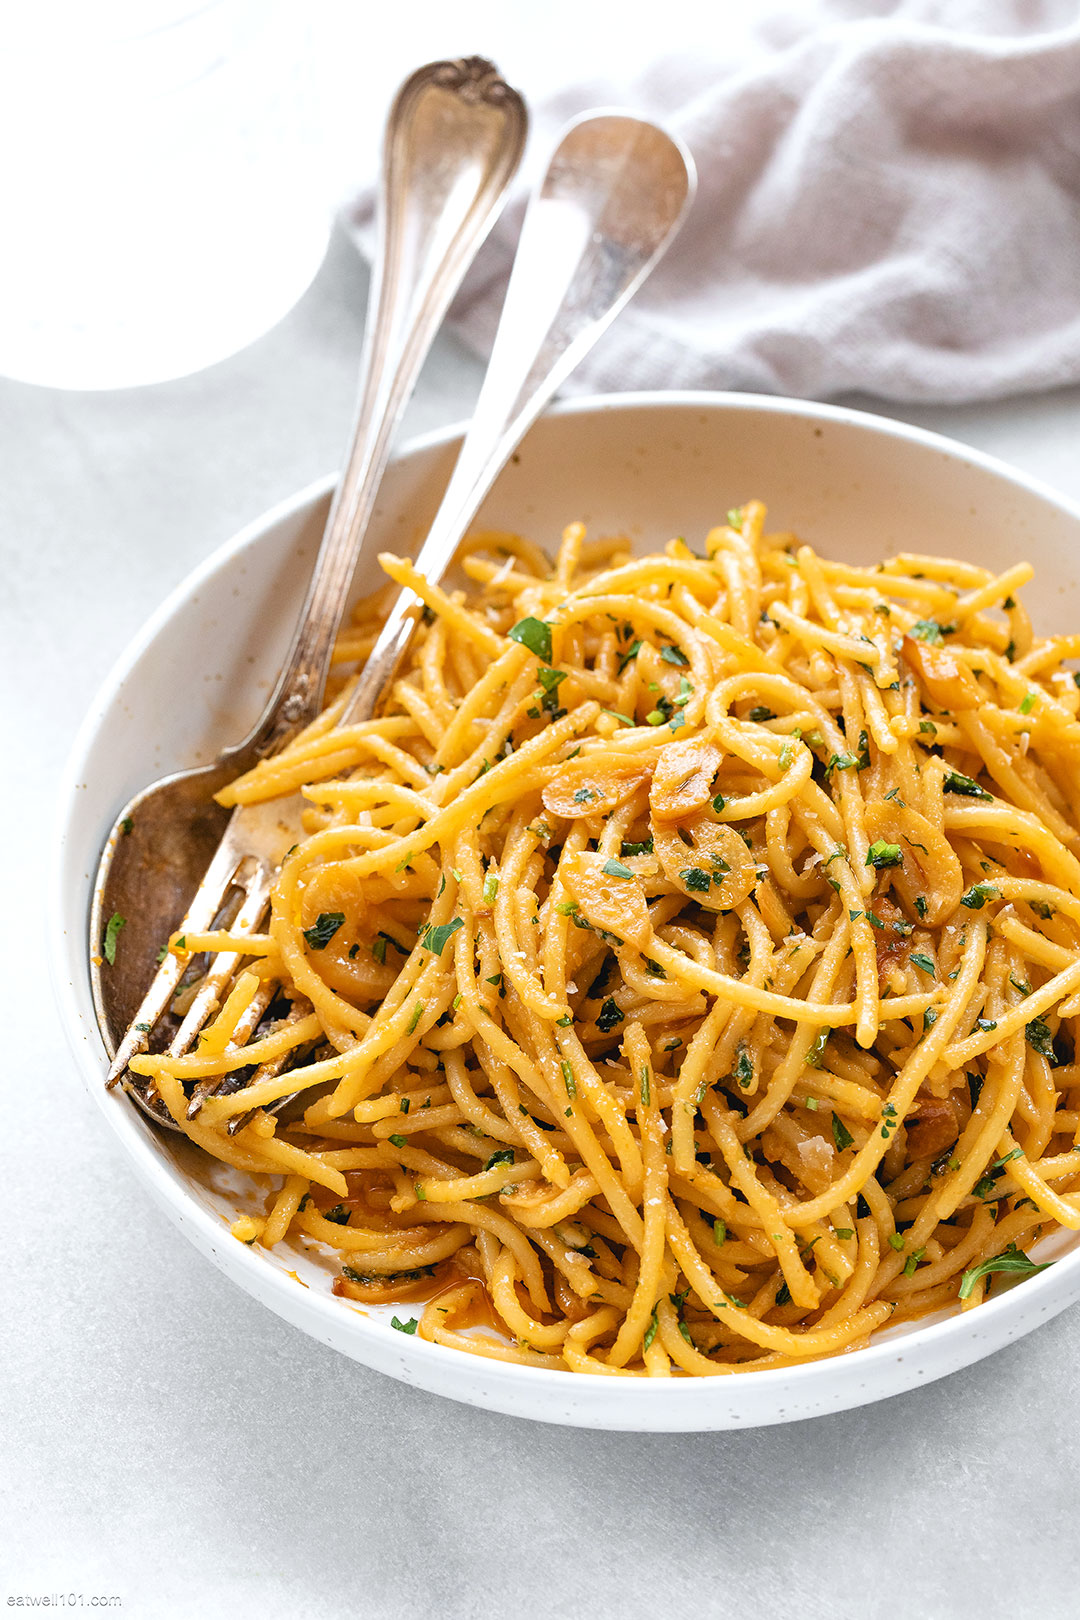 pasta recipes 12 pasta recipes that take 12 minutes each - Info Recipes ...